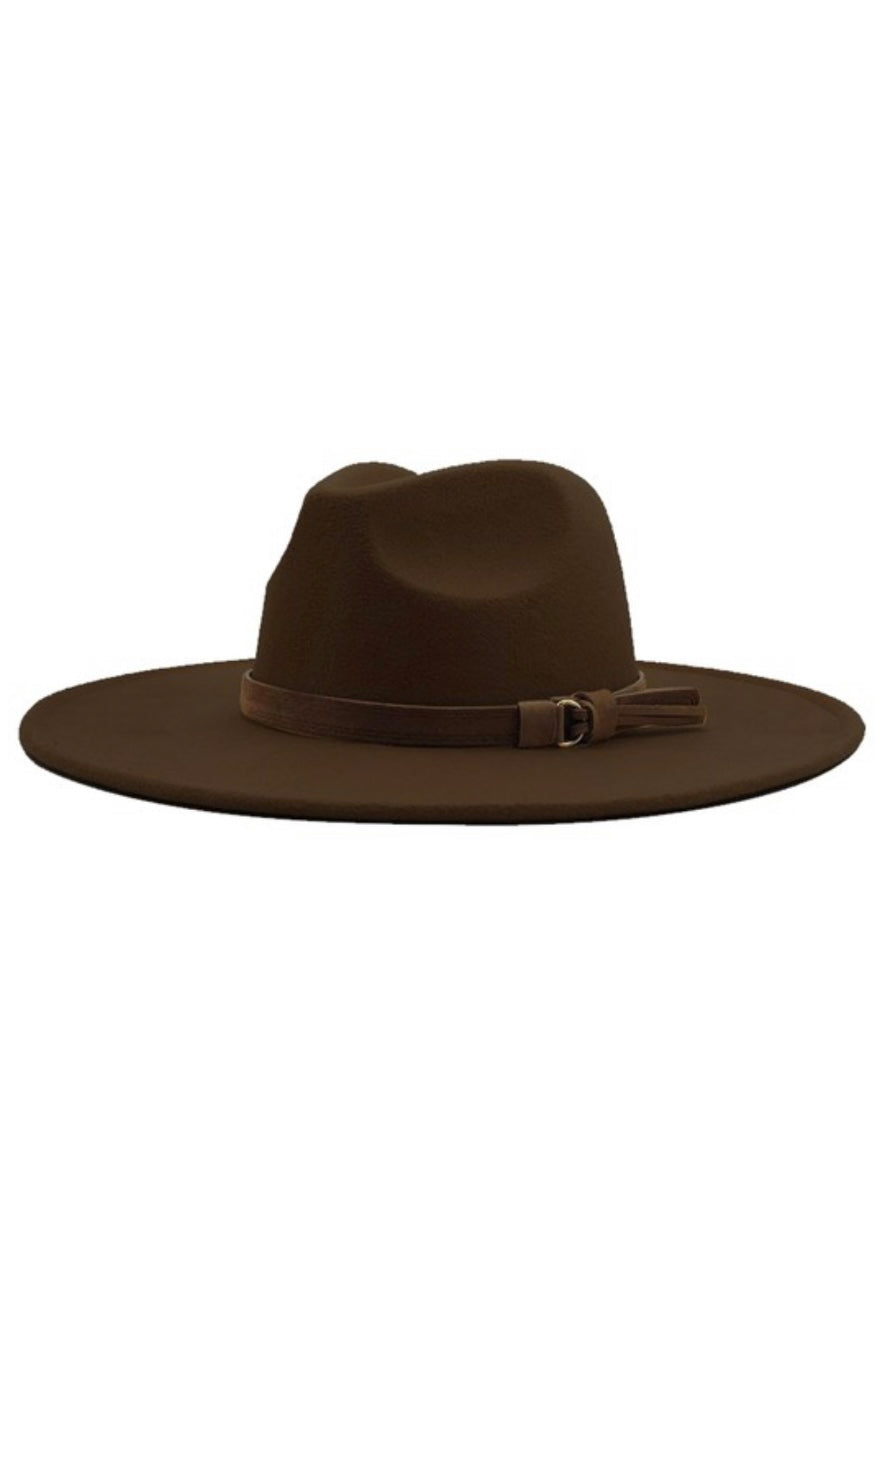 Calhan Coffee Brown Wide Brim Dandy Panama Hat